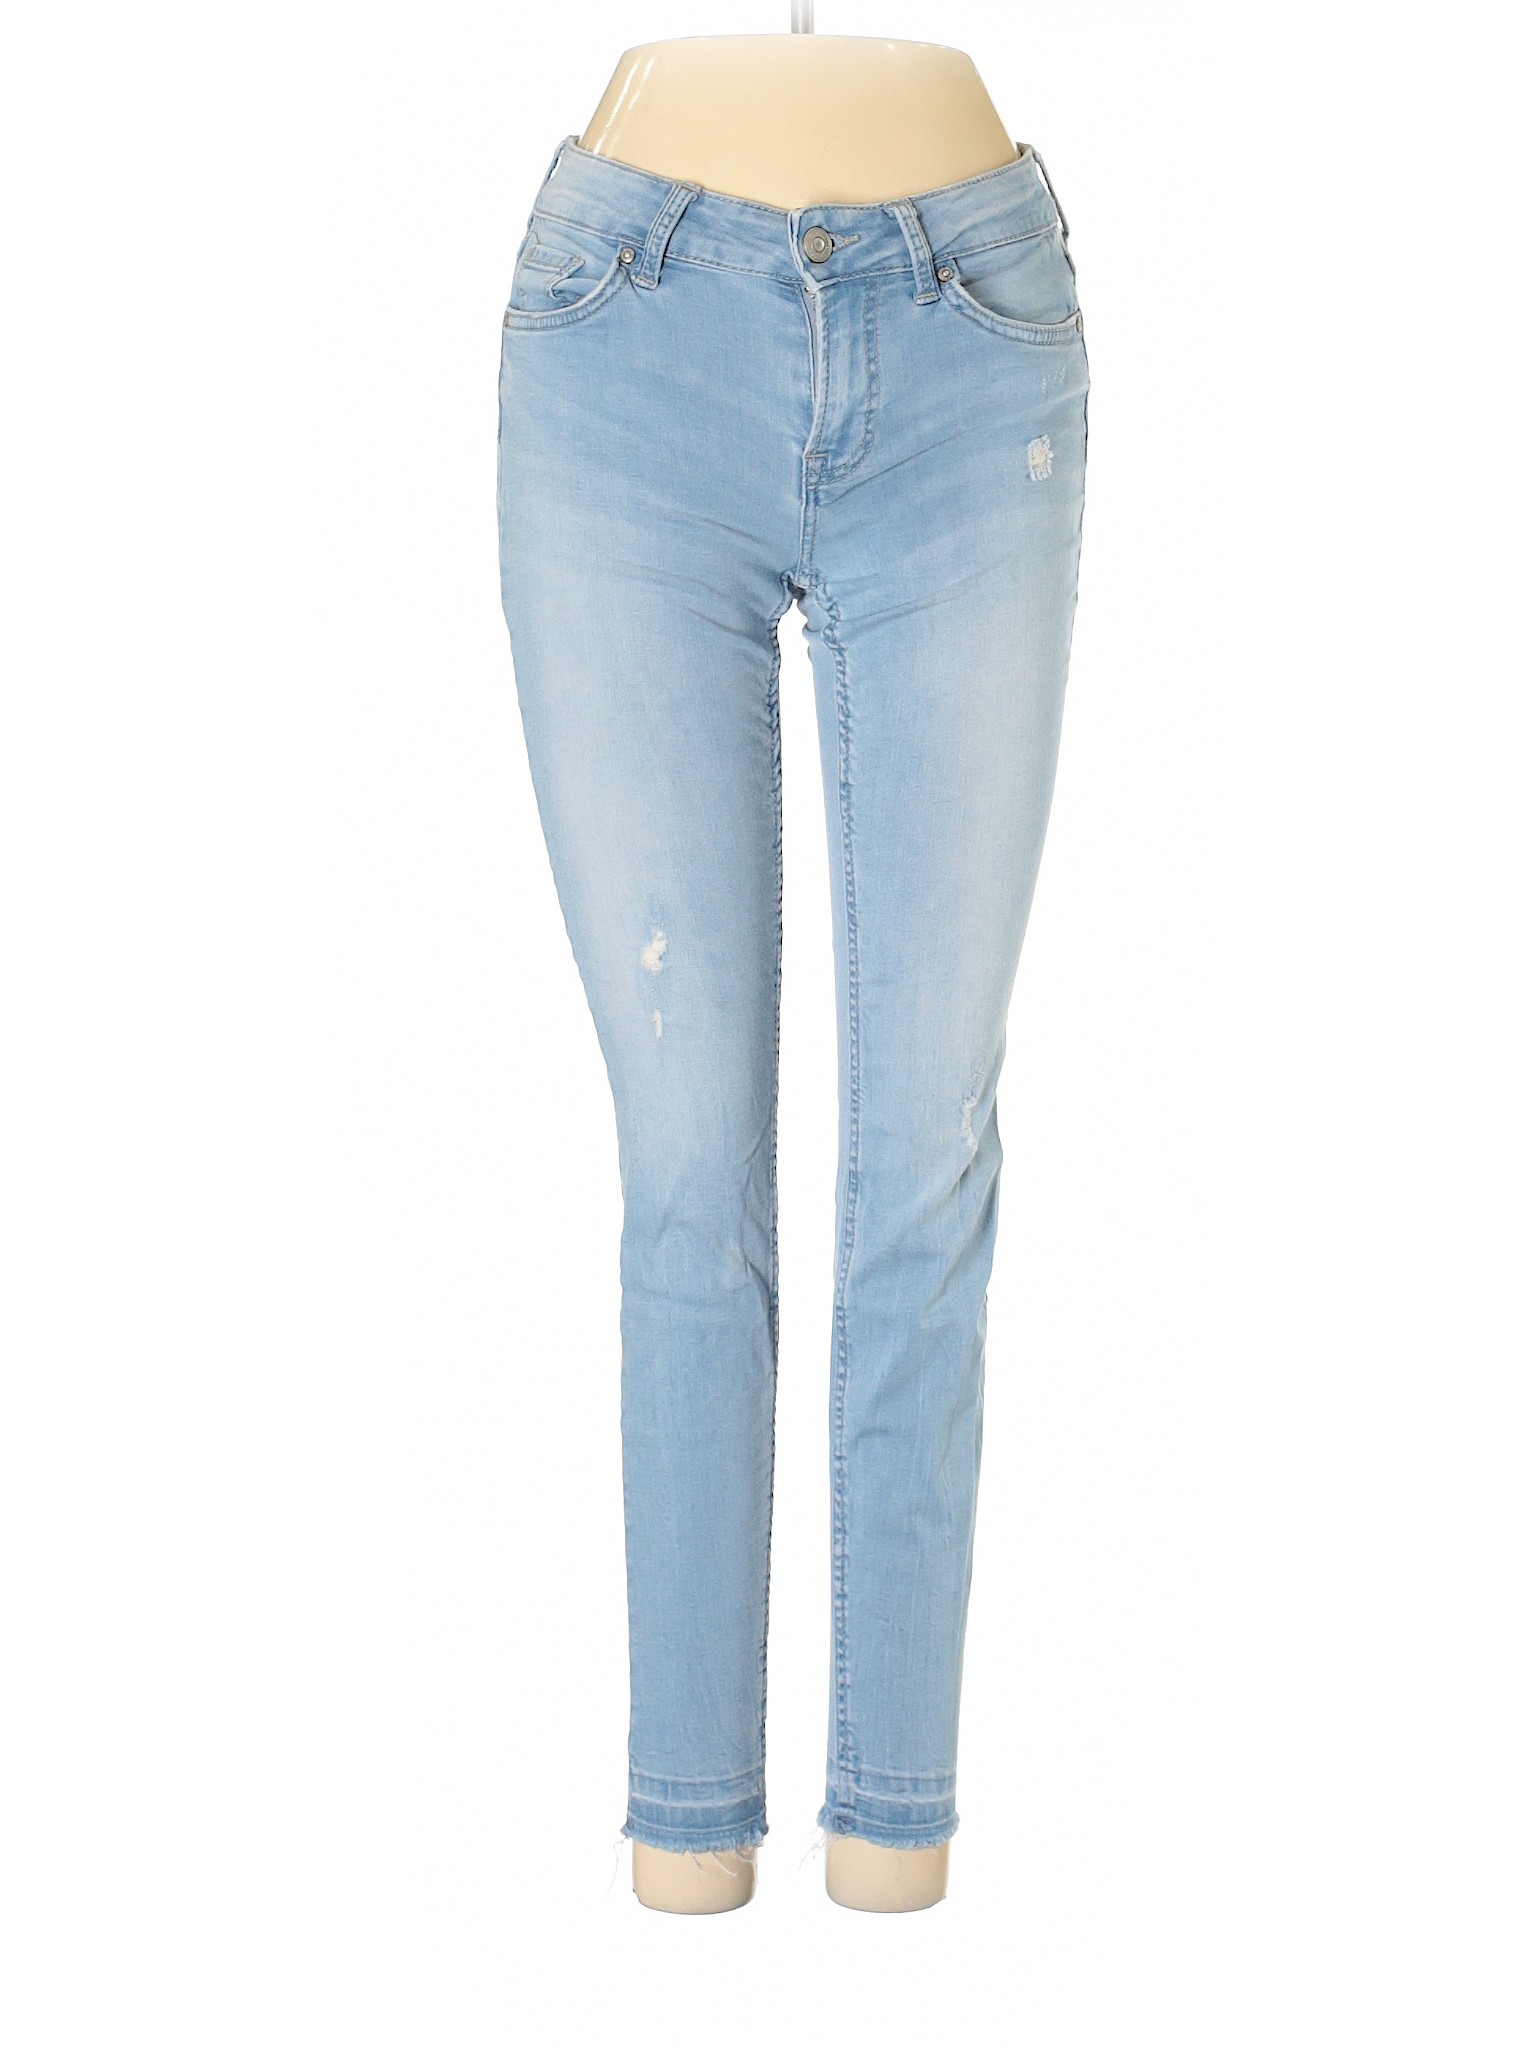 Bershka Women Blue Jeans 2 | eBay